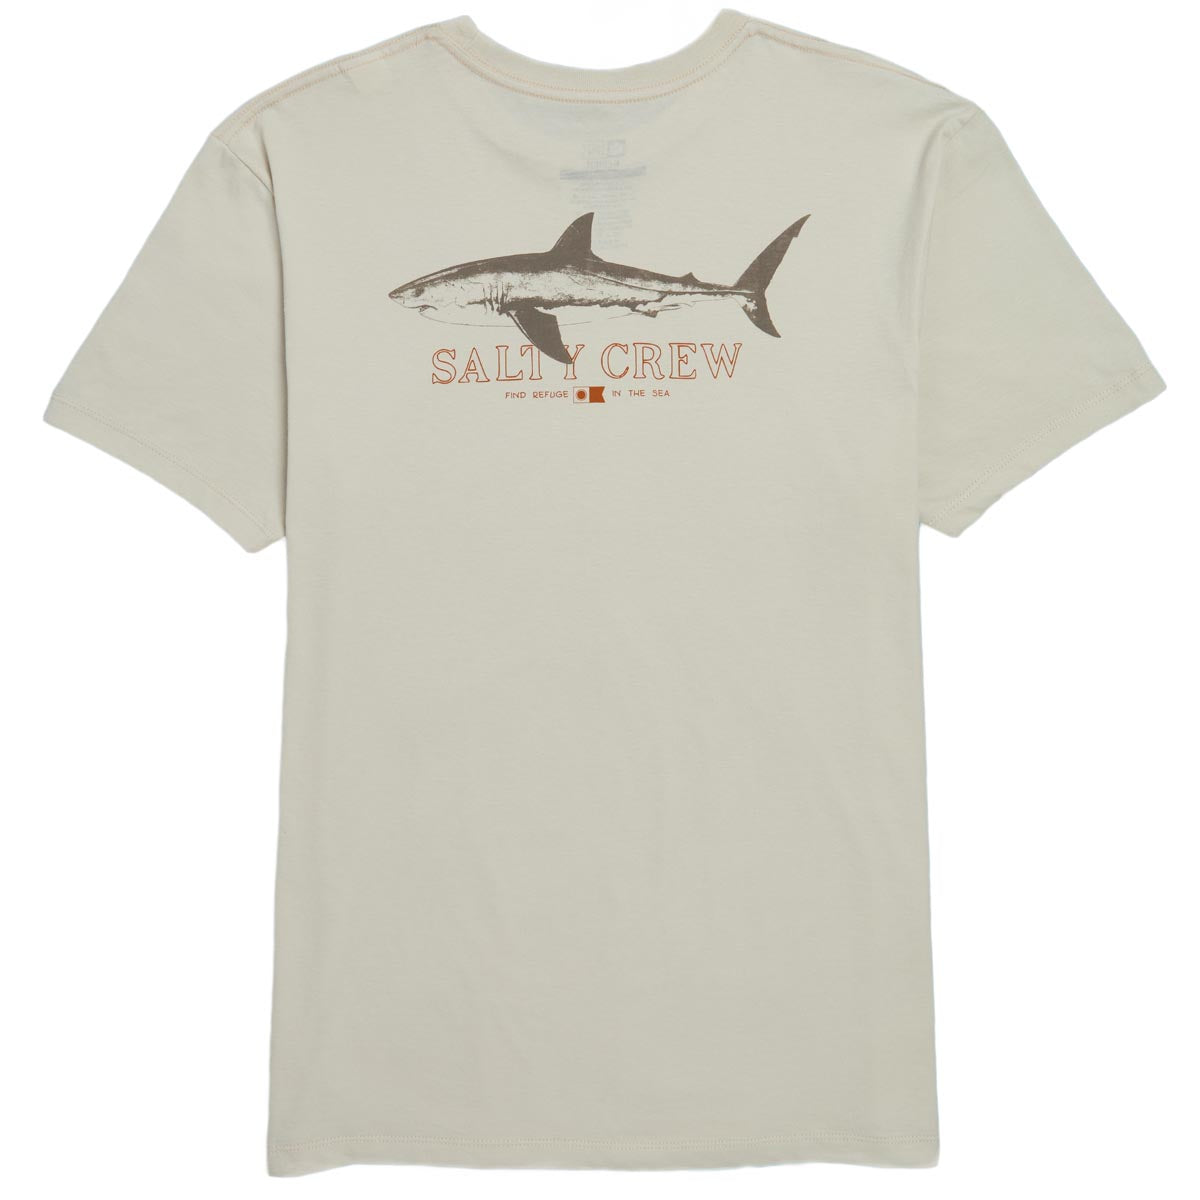 Salty Crew Brother Bruce Premium T-Shirt - Bone image 1